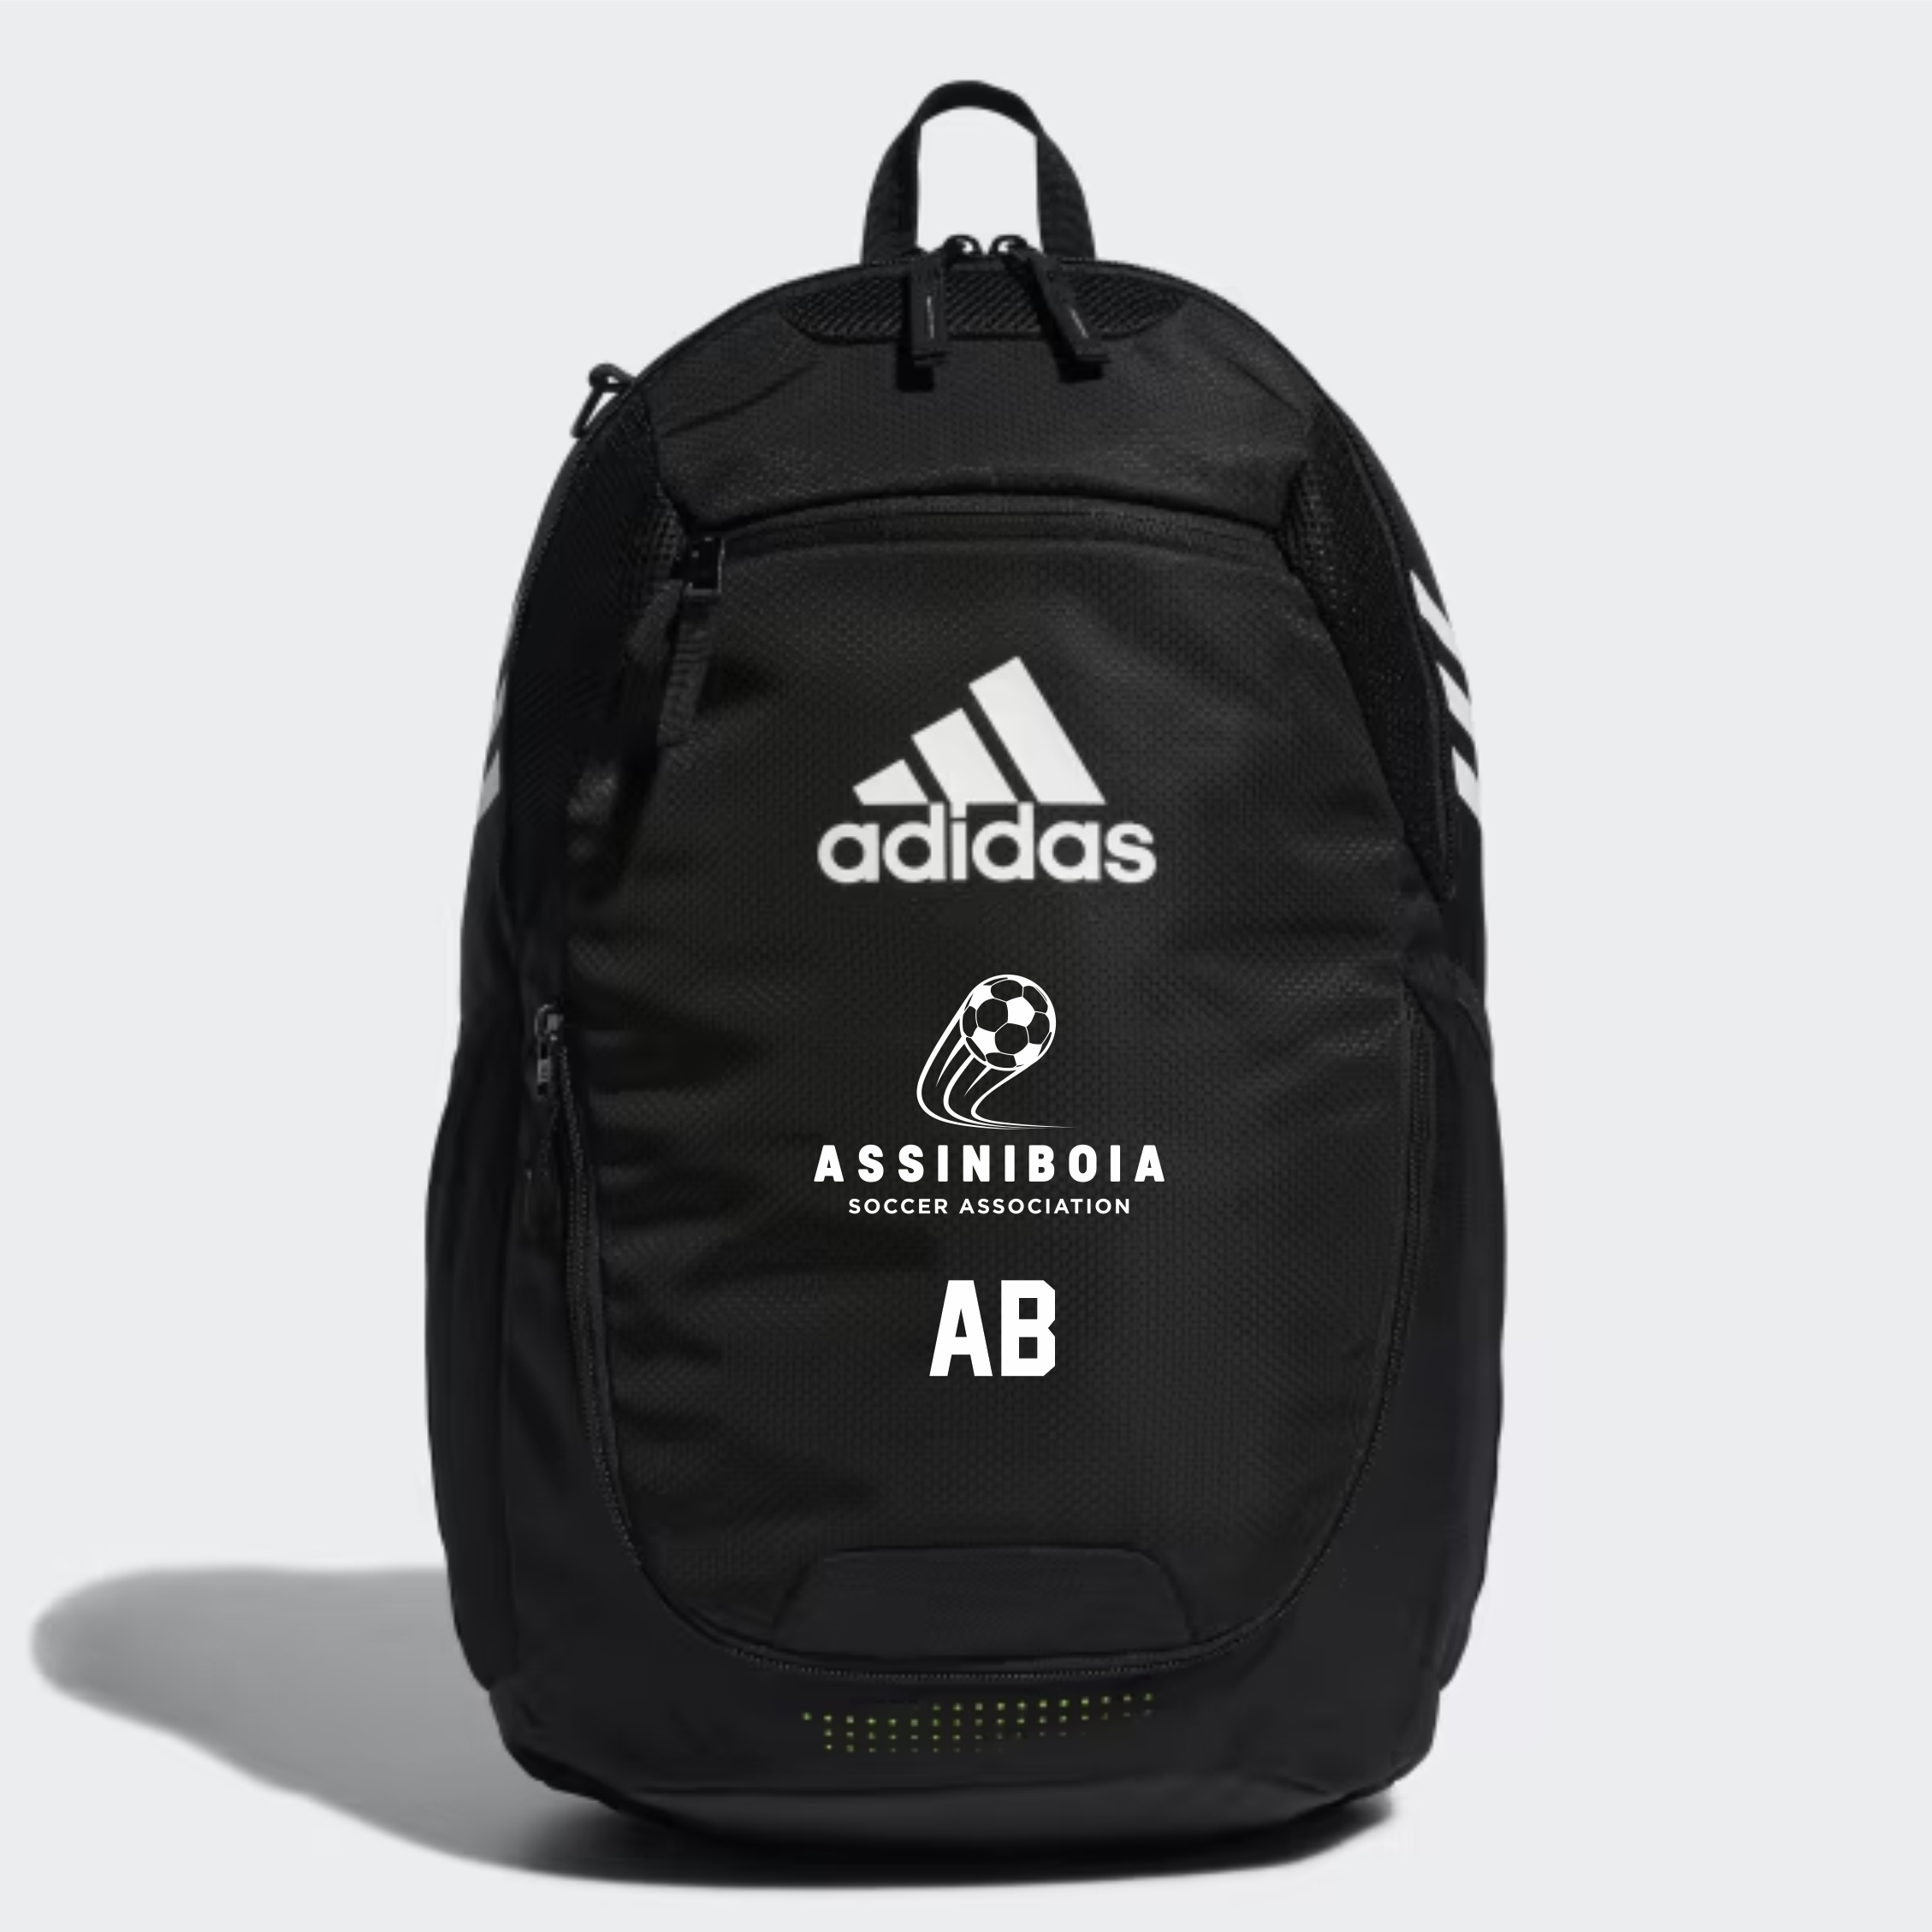 Adidas Stadium Backpack (Assiniboia Soccer)